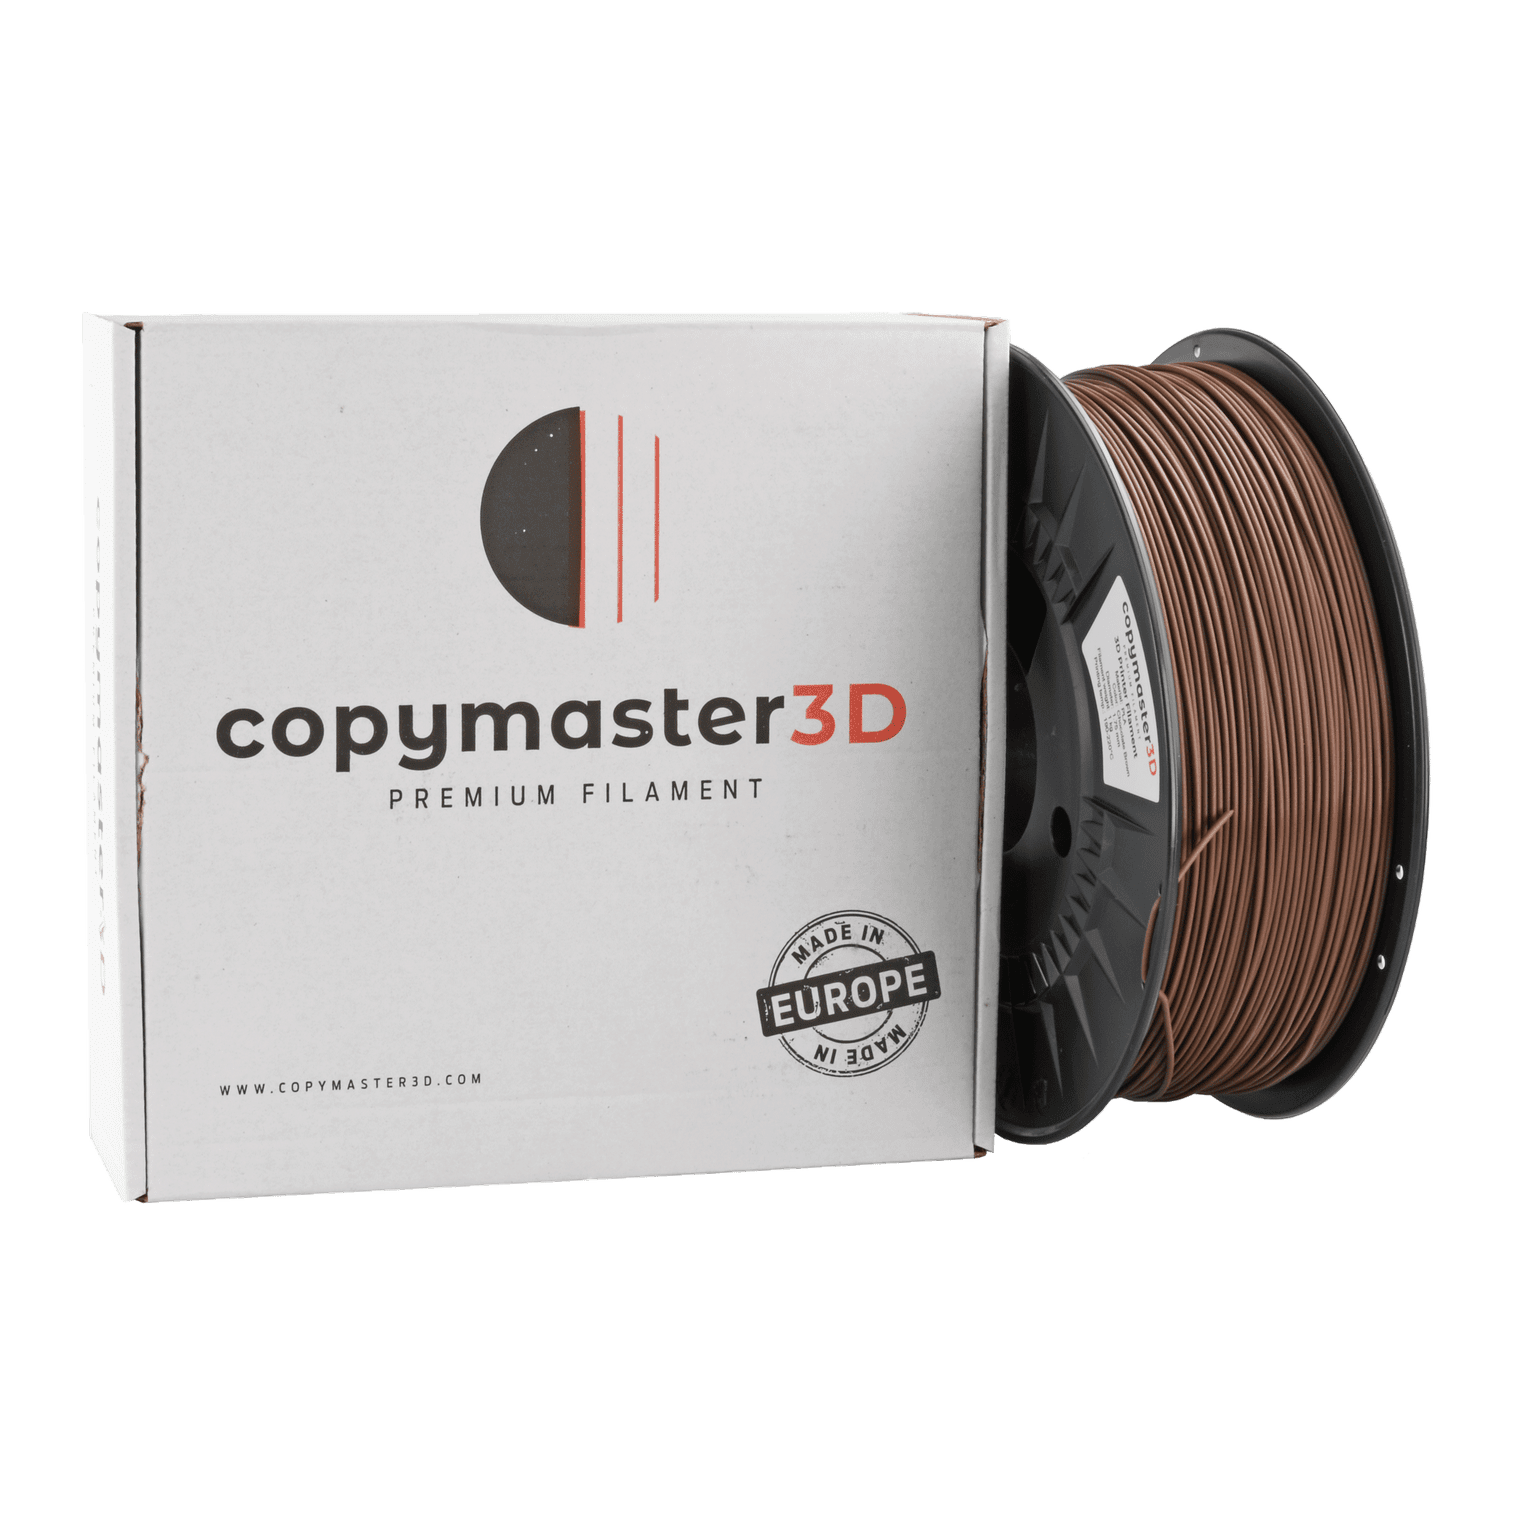 Copymaster3D Premium PLA Filament 1.75mm 1KG Chocolate Brown